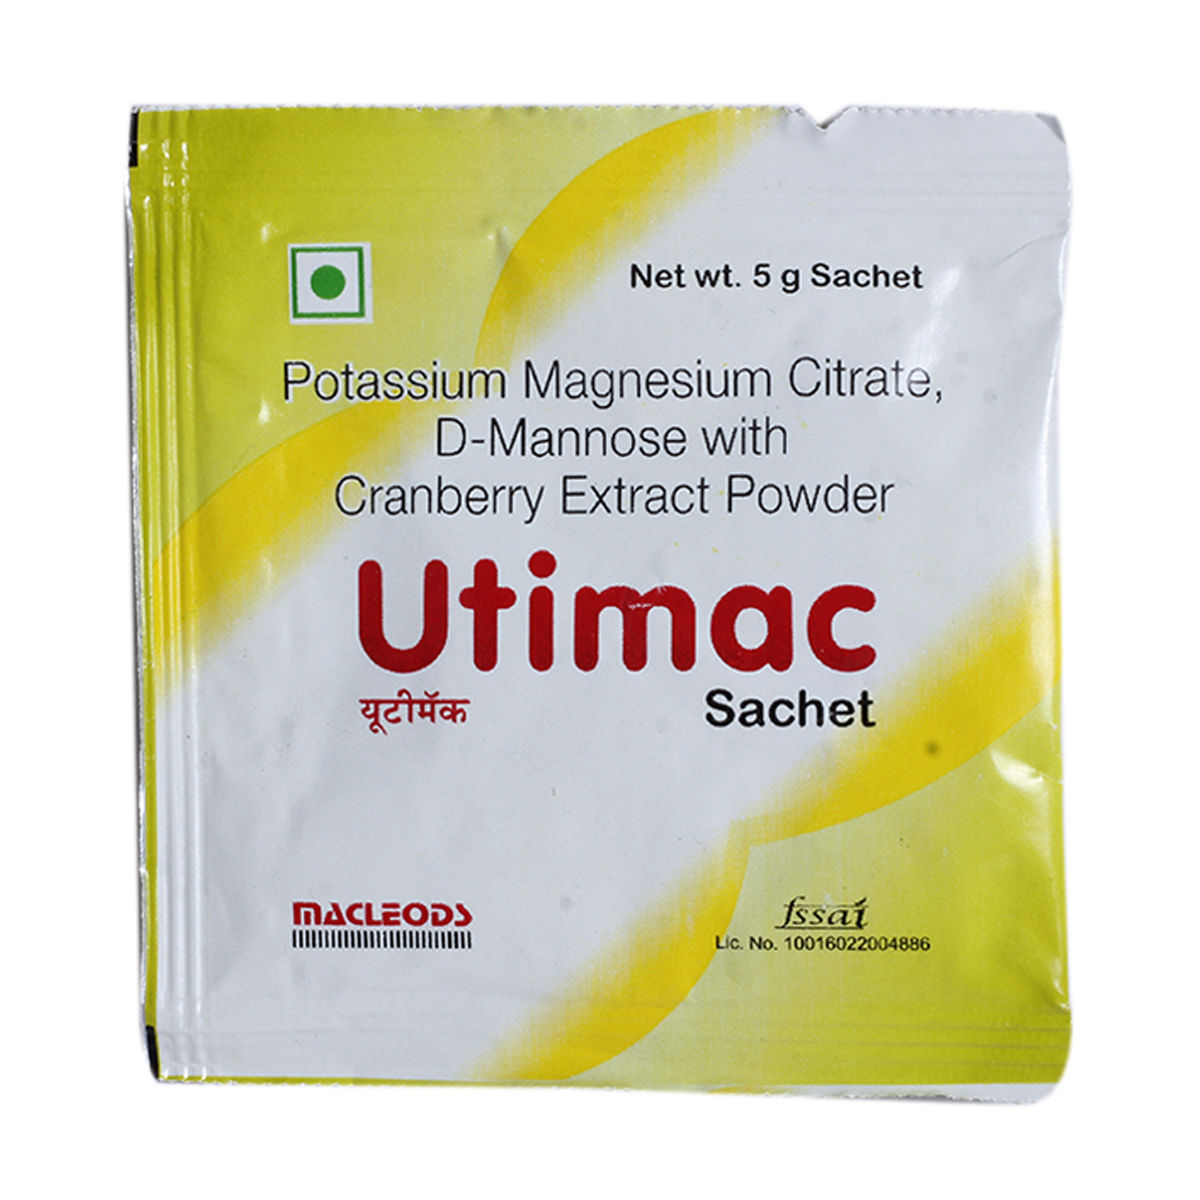 Buy Utimac Sachet 5gm Online